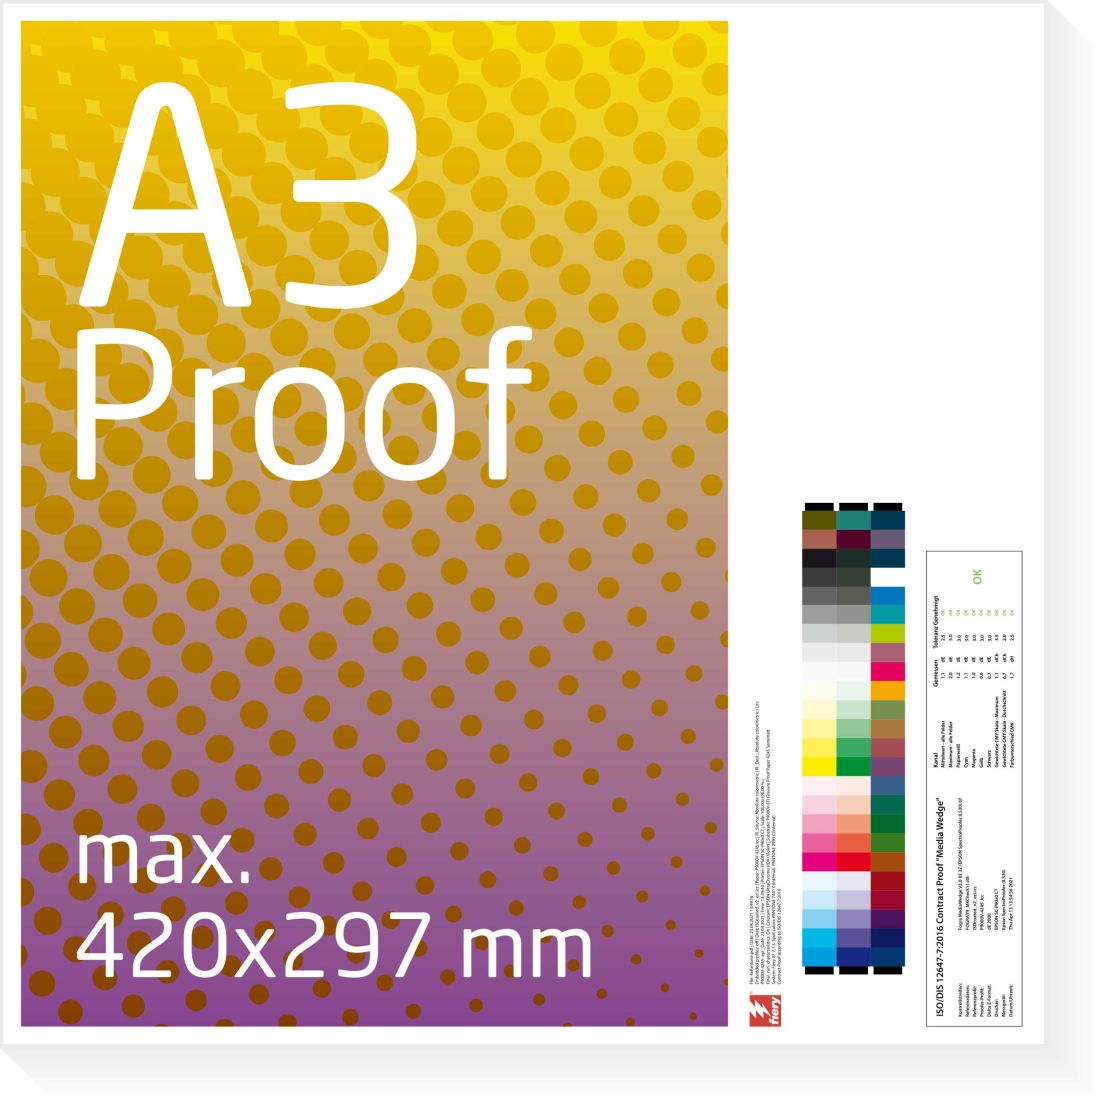 DIN A3 Proof, Farbproof, Digitalproof nach Fogra / DIN 12647-7